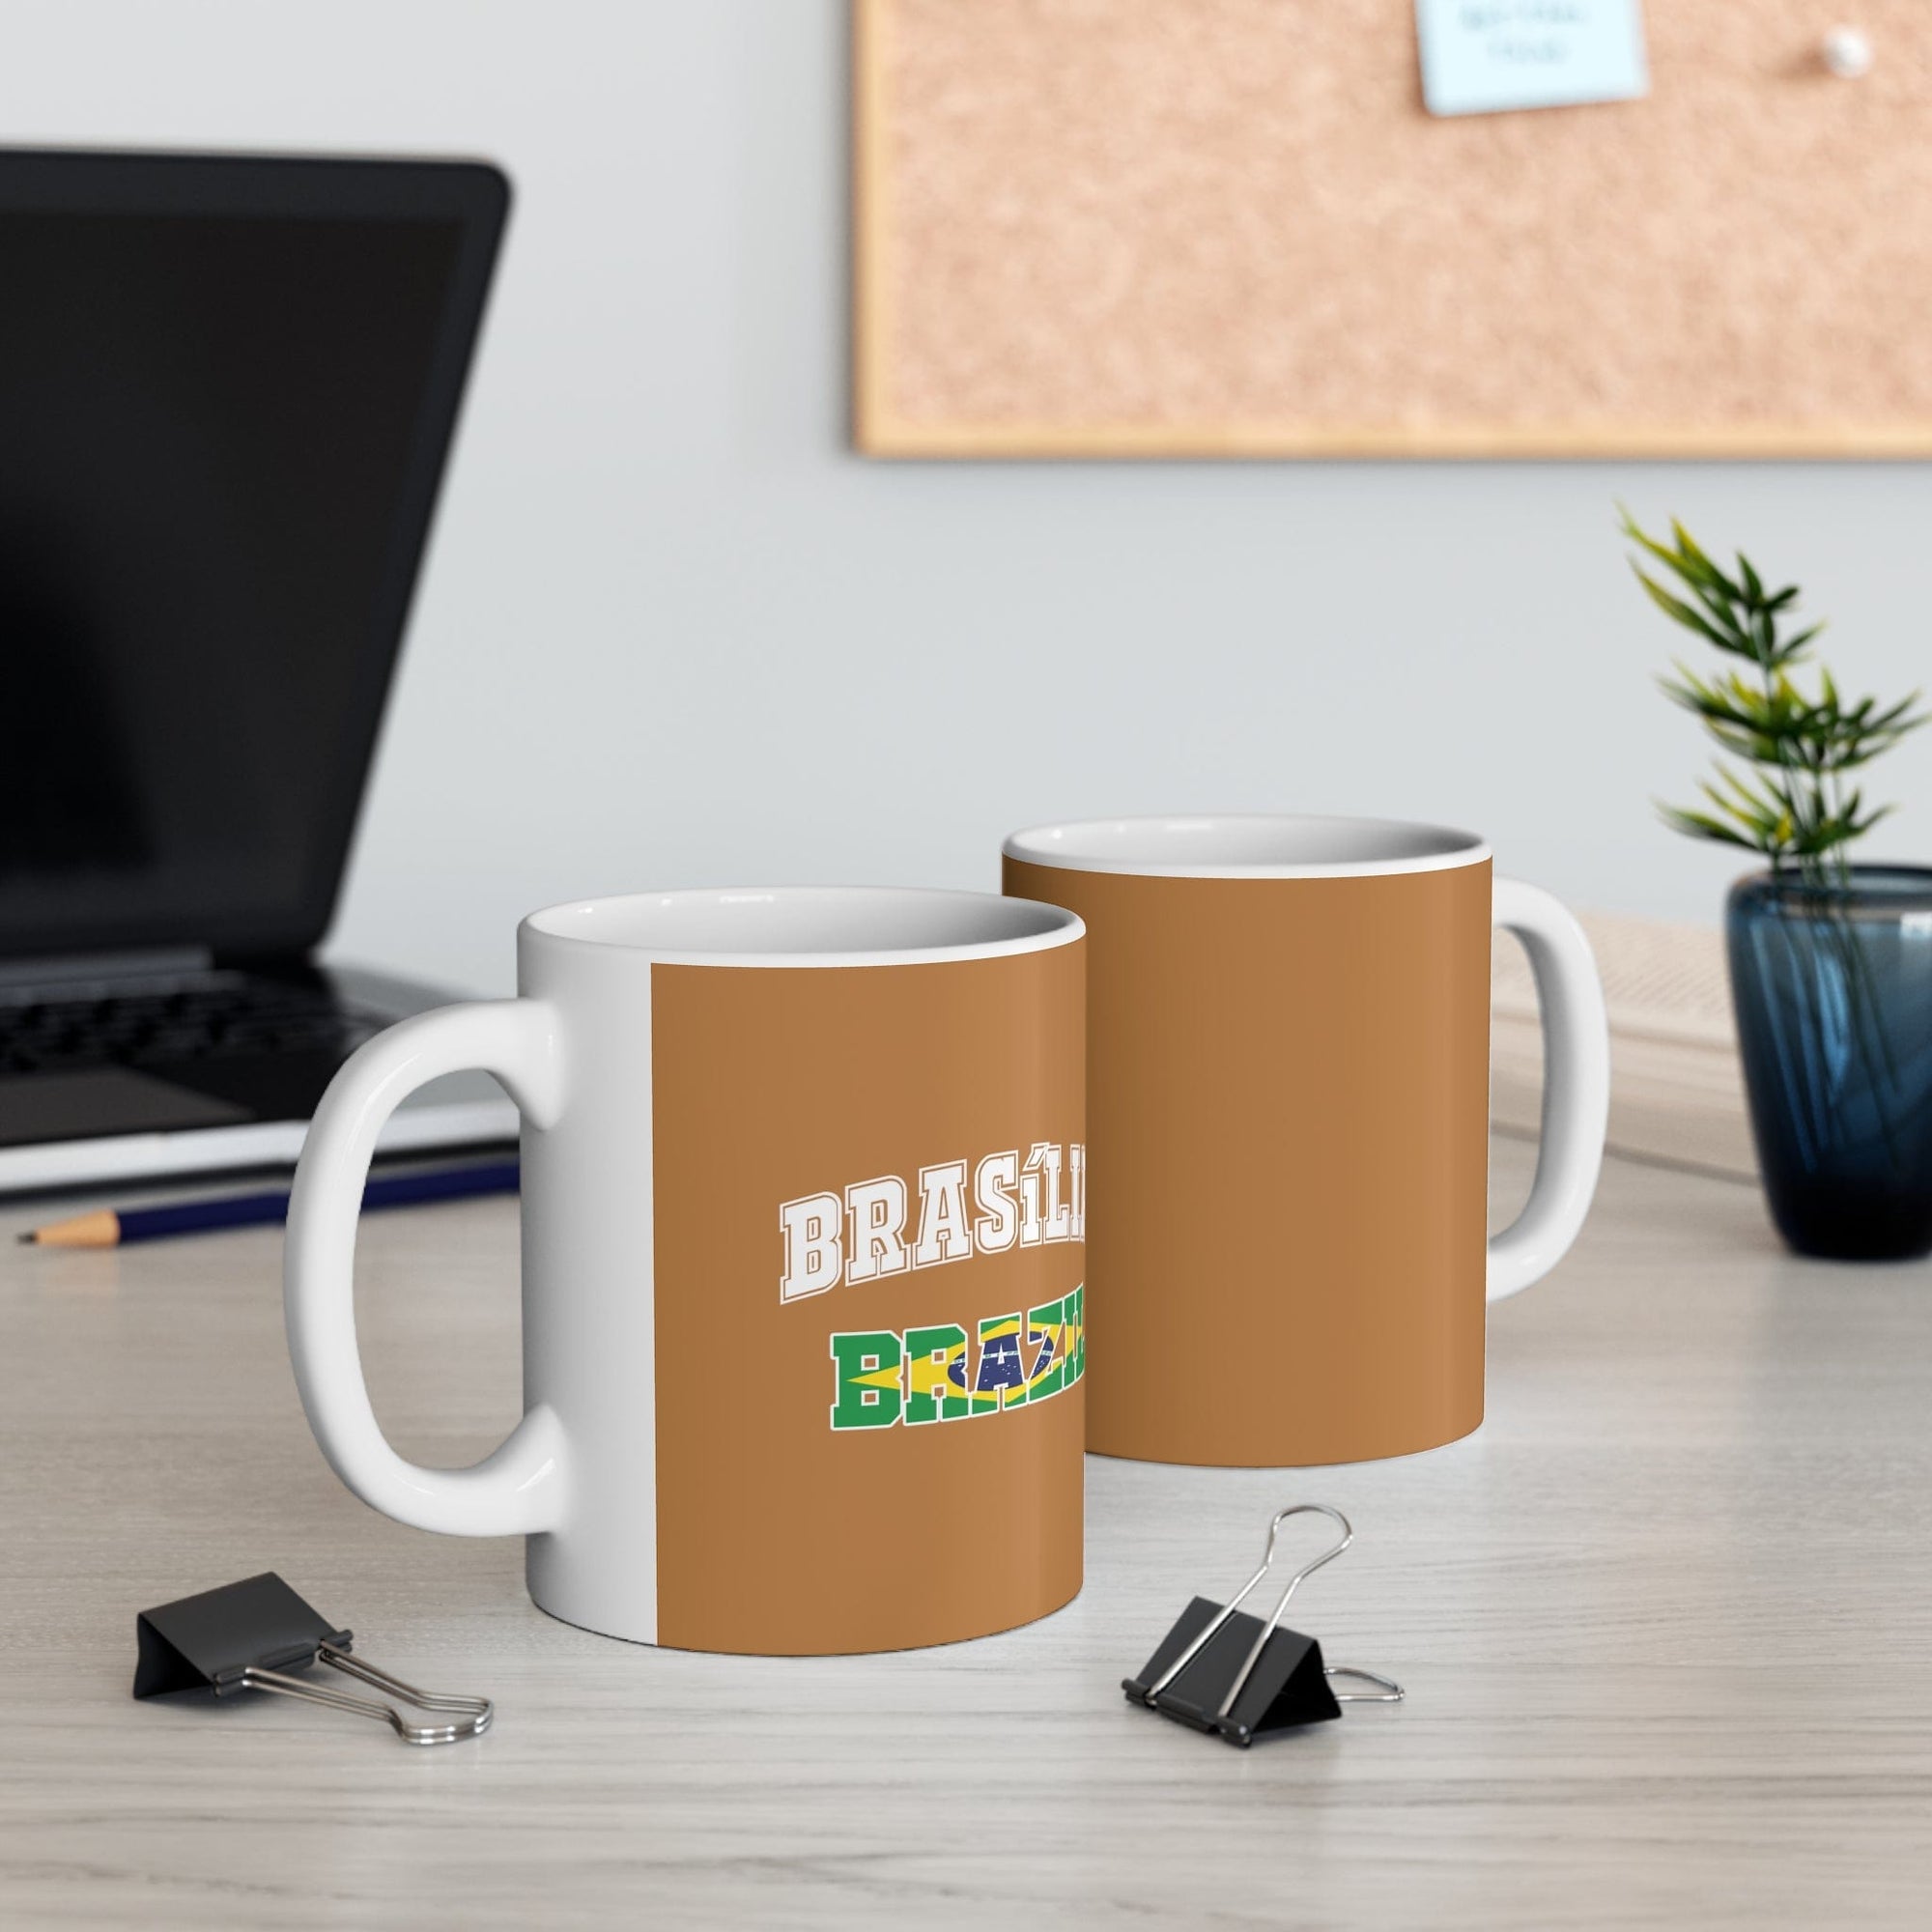 BRASILIA - Awesome Ceramic Mug, Exclusive Design